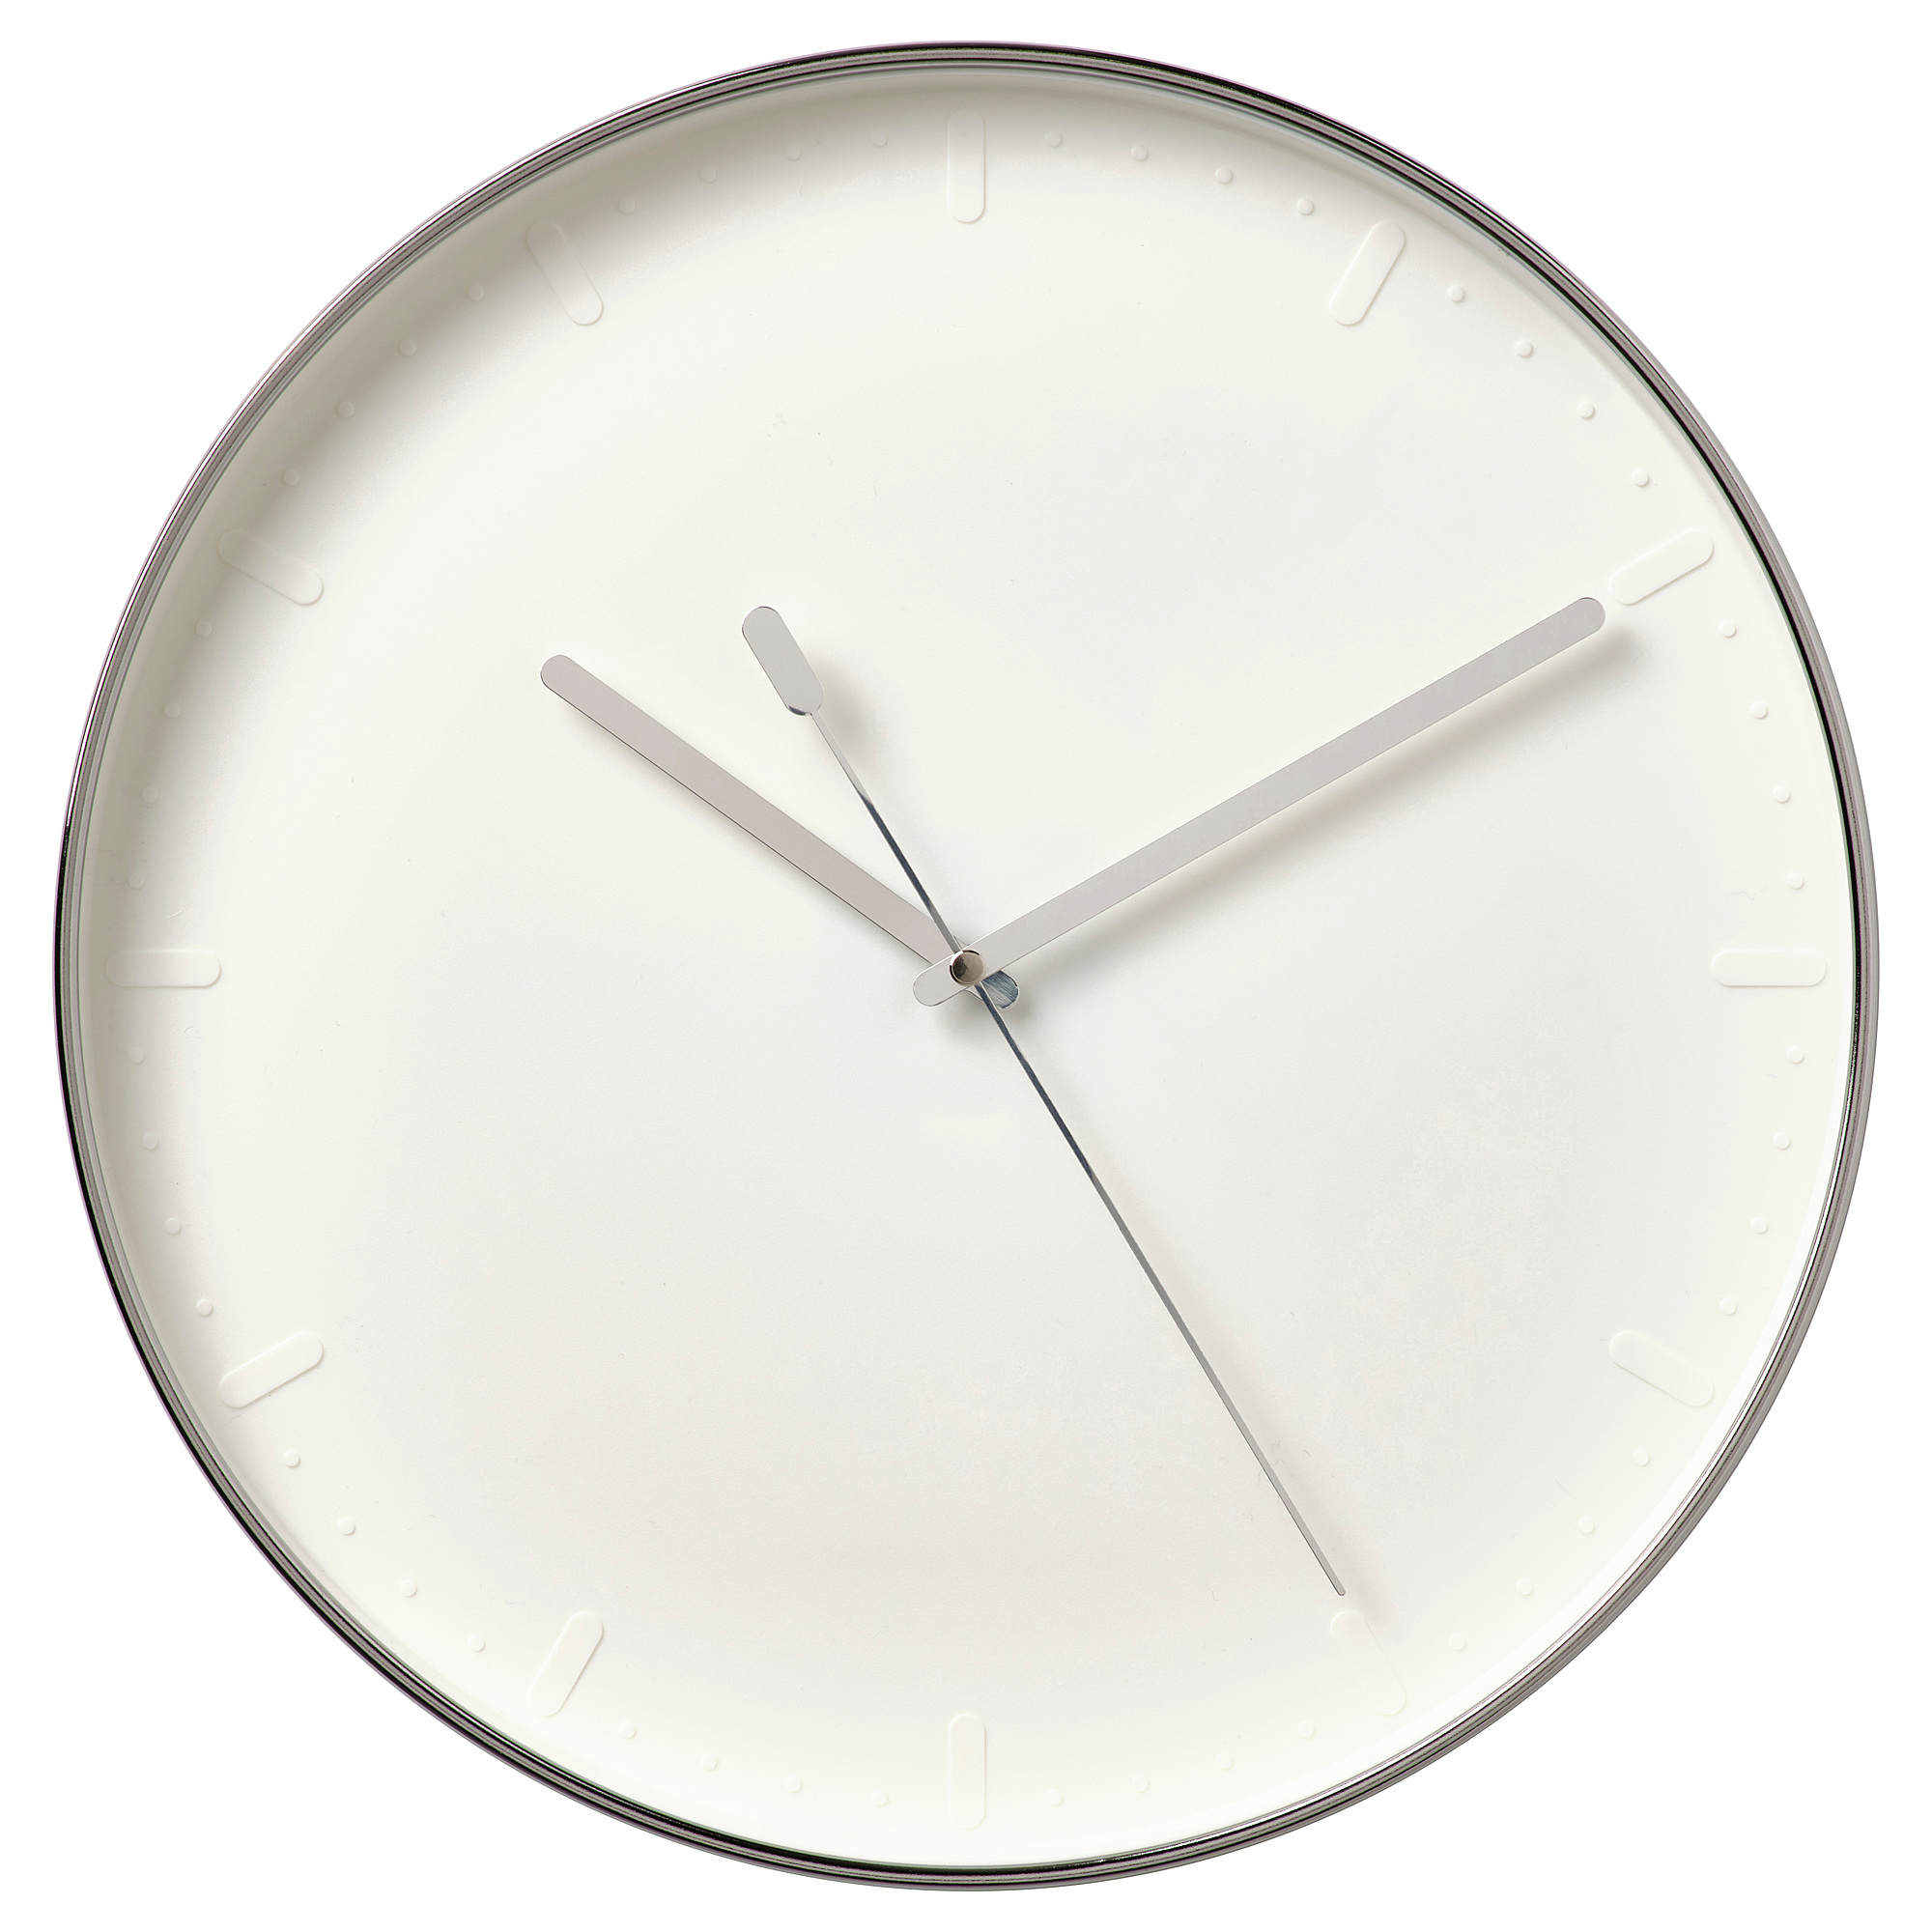 IKEA NOLLNING Clock/Thermometer/Alarm Instructions